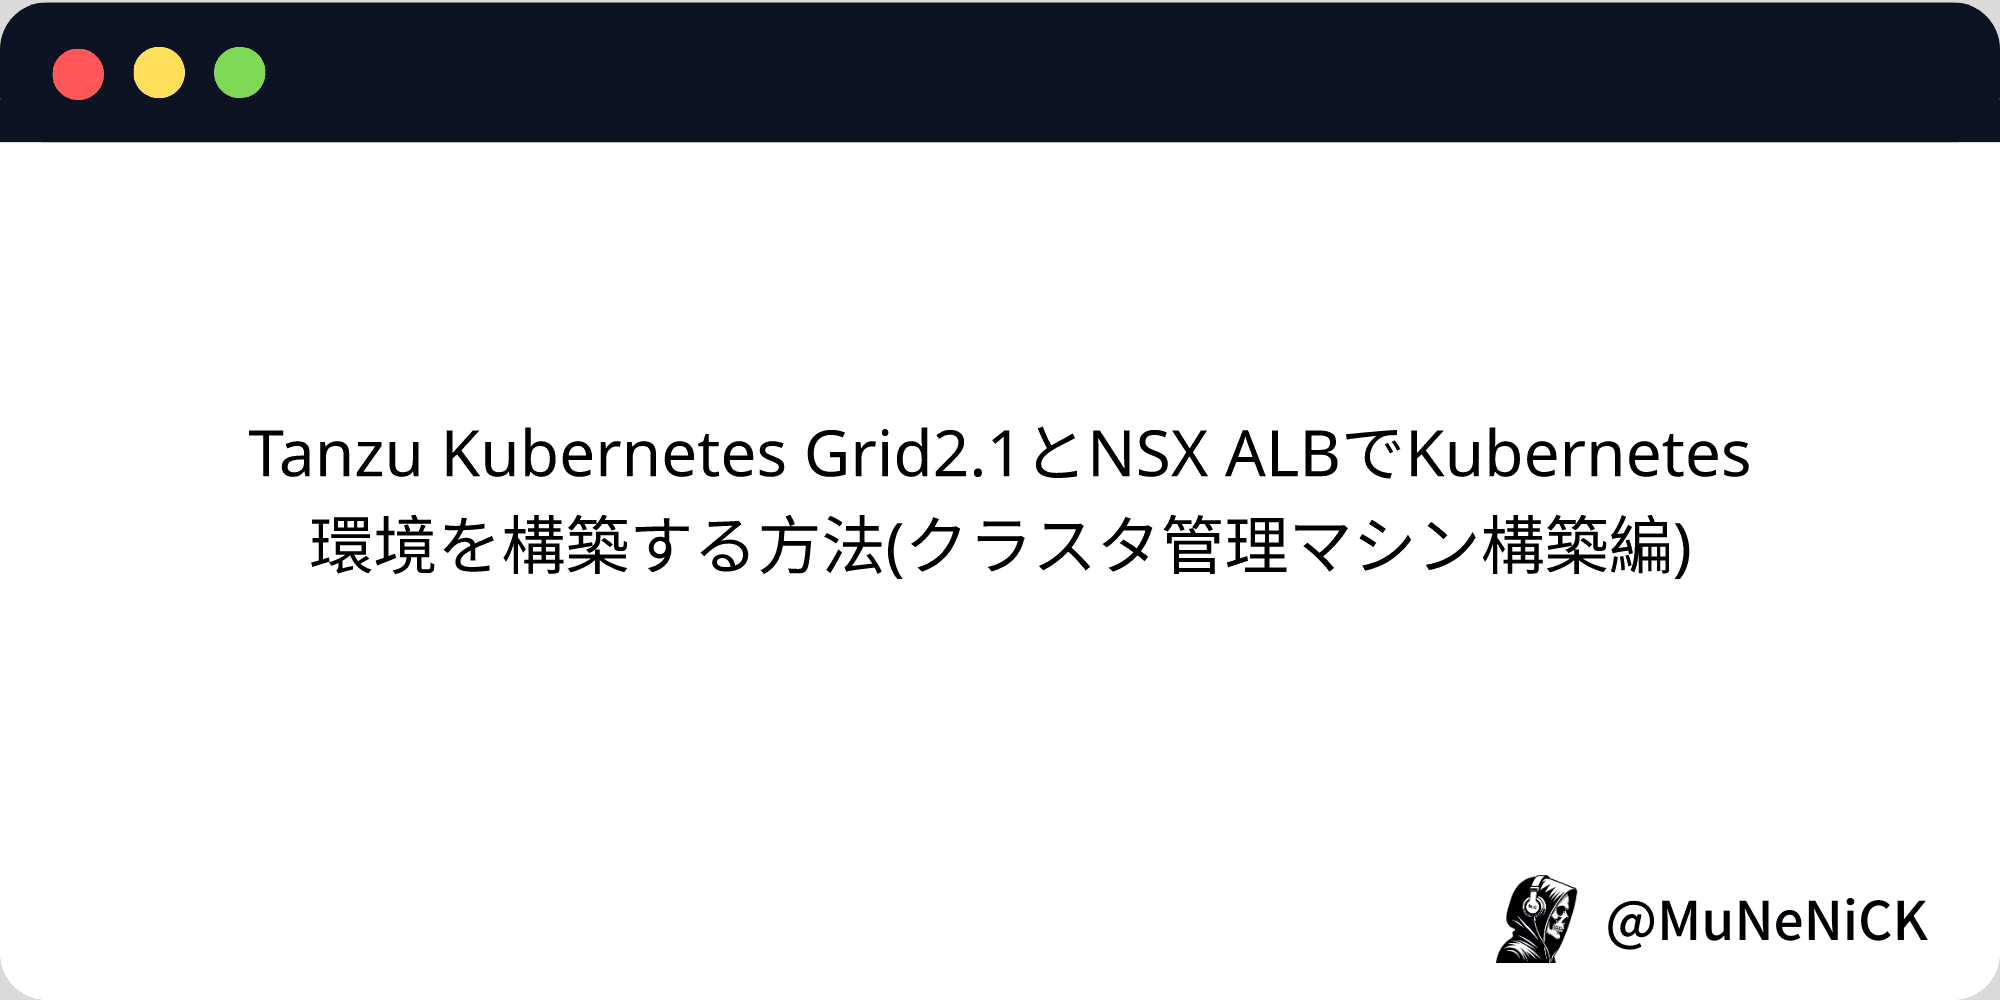 Cover Image for Tanzu Kubernetes Grid2.1とNSX ALBでKubernetes環境を構築する方法(クラスタ管理マシン構築編)